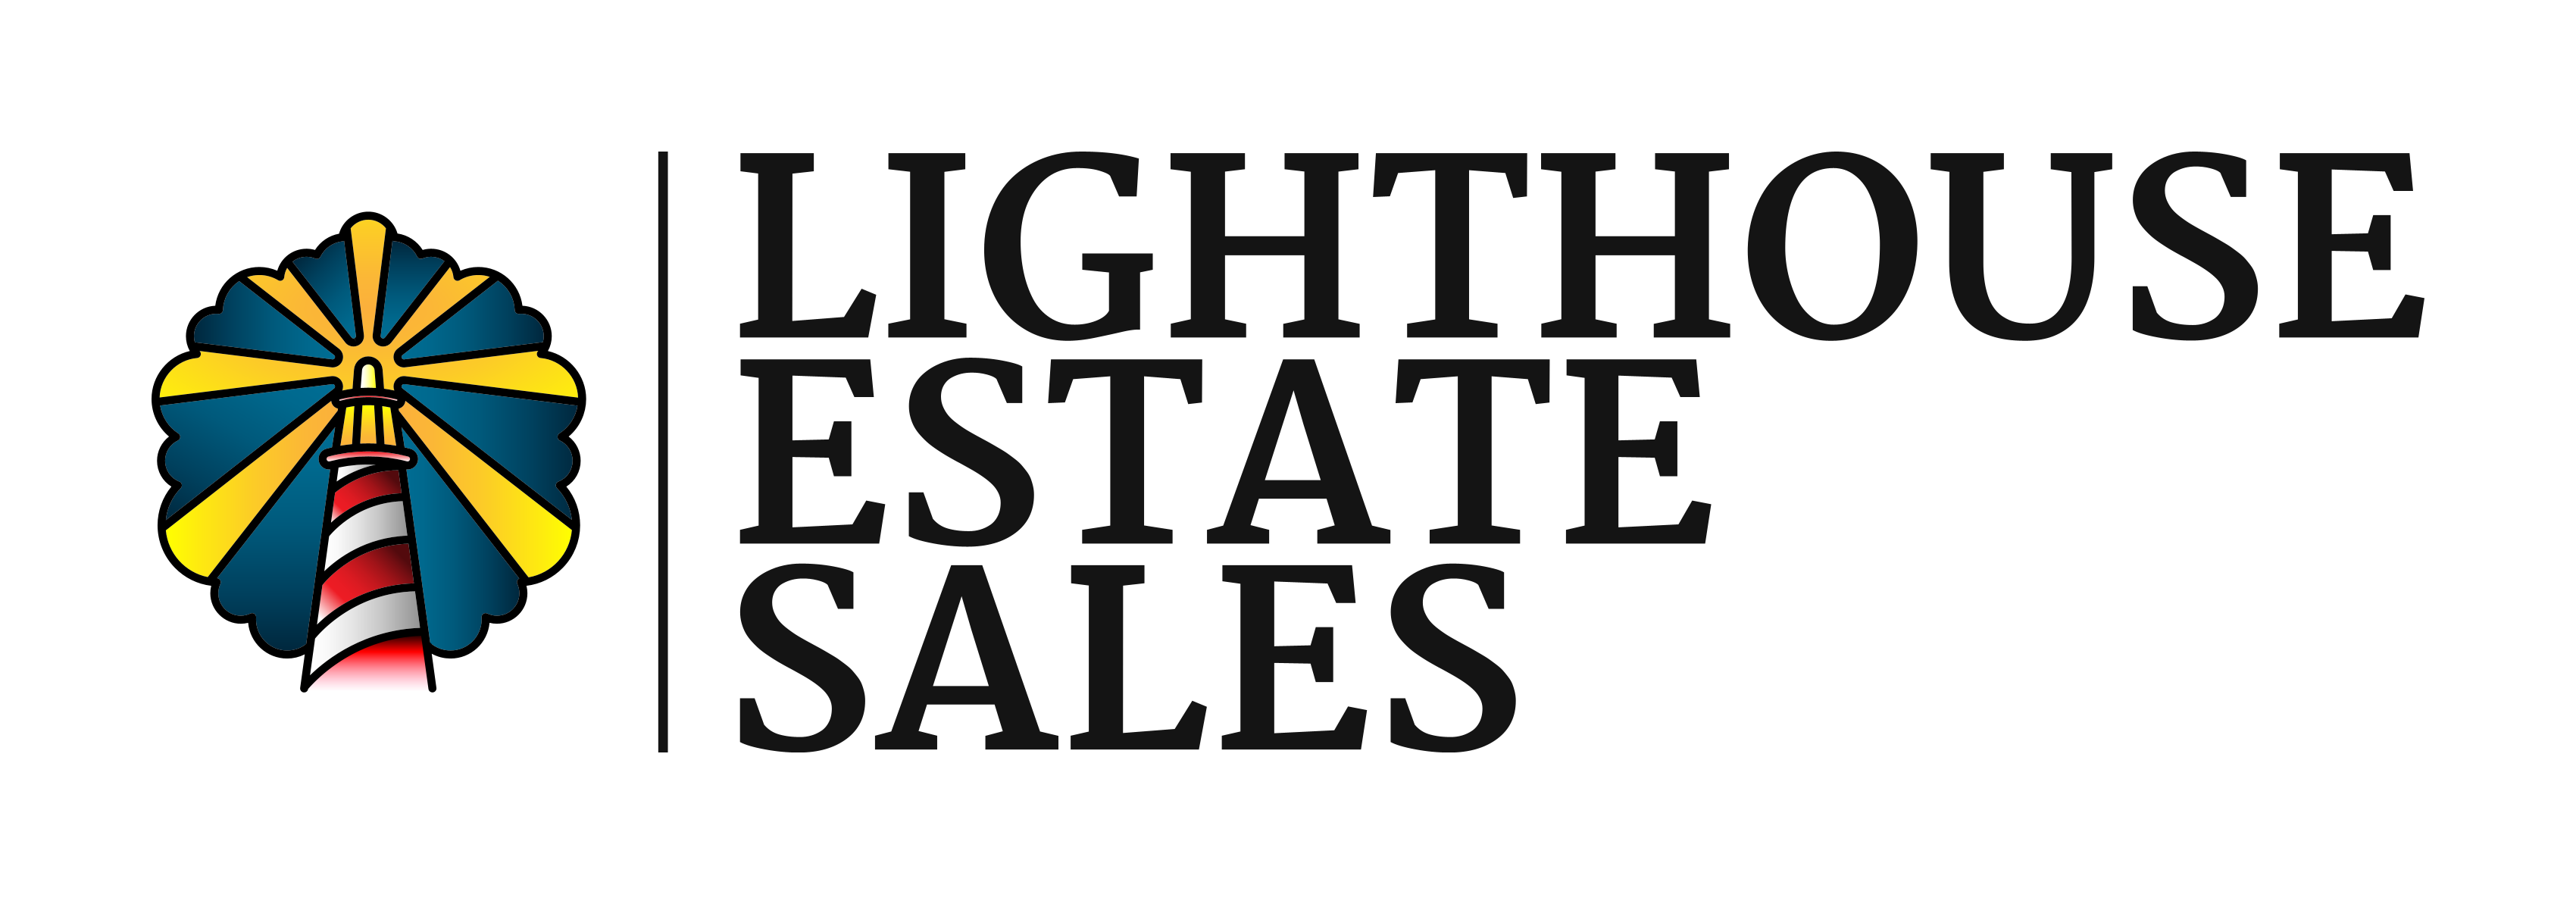 Lighthouse Estate Sales | AuctionNinja